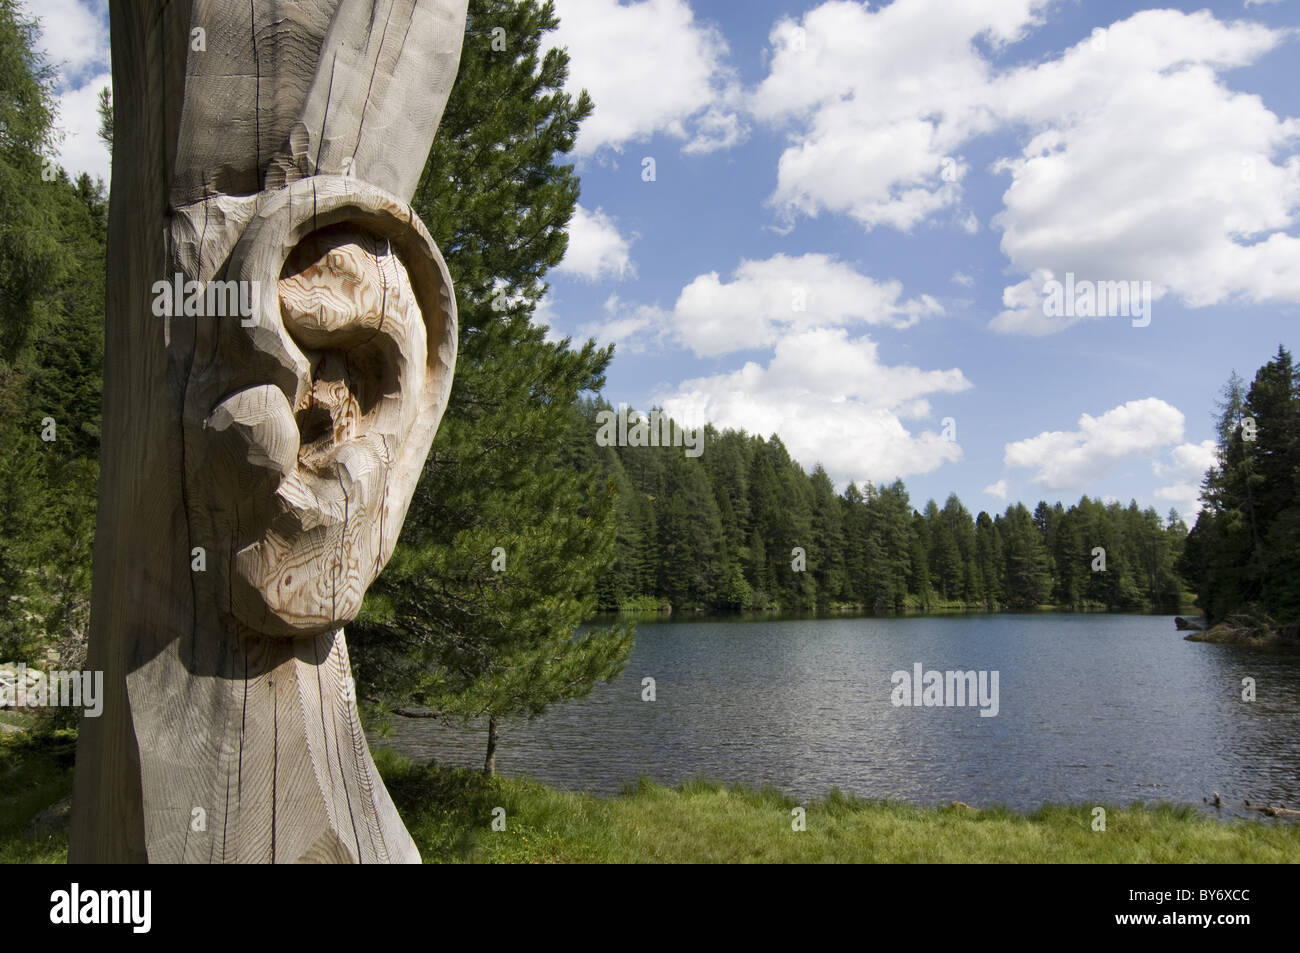 Sculpture of an ear at a lake shore, sensory perception, silentness, Turracher Hoehe, Austria Stock Photo